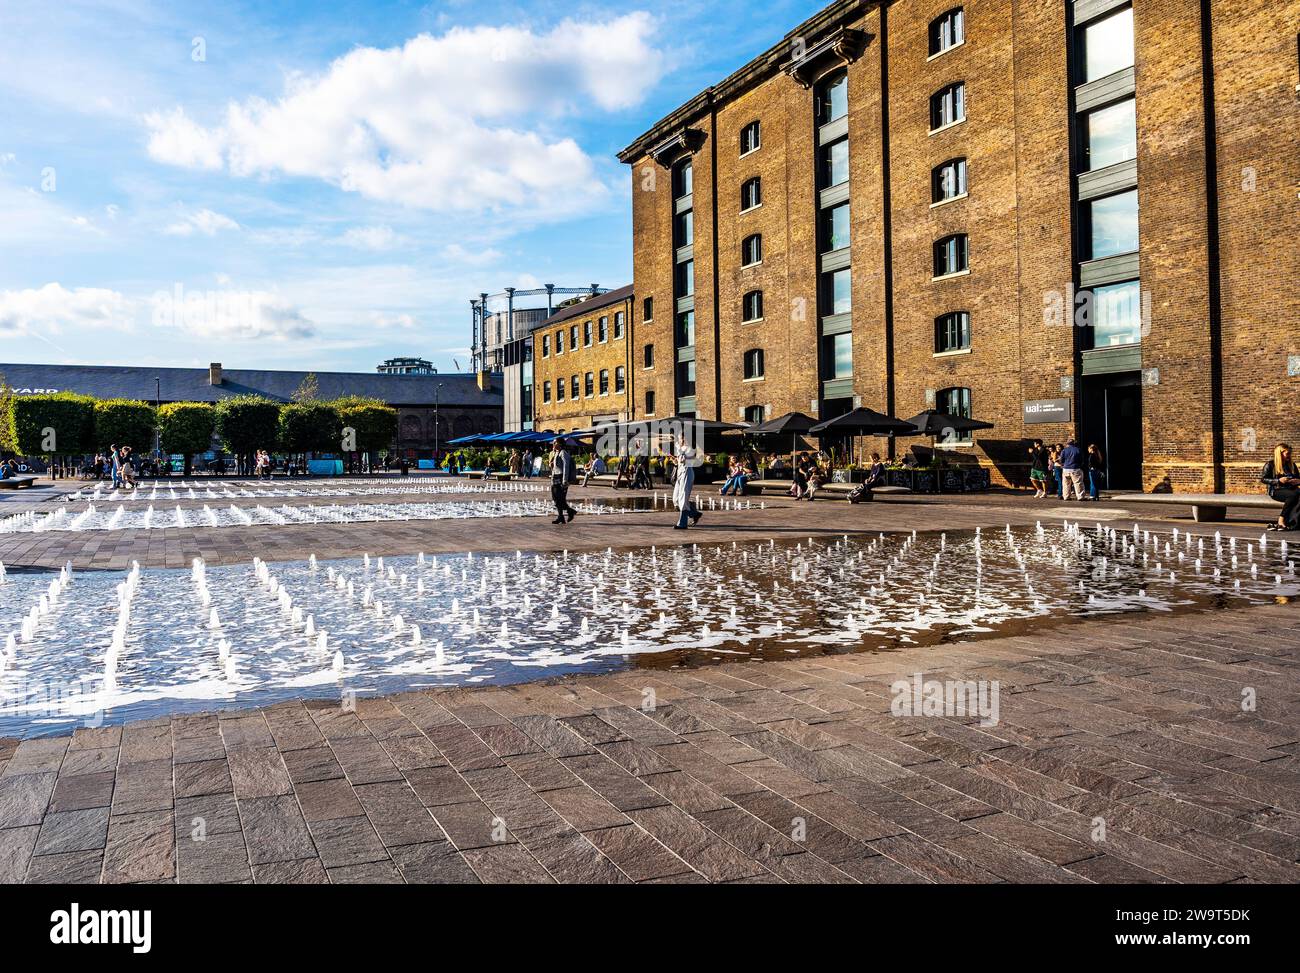 Springbrunnen am Granary Square, im neu entwickelten King's Cross Central Bereich nahe Regent's Canal, im London Borough of Camden, London, Großbritannien Stockfoto